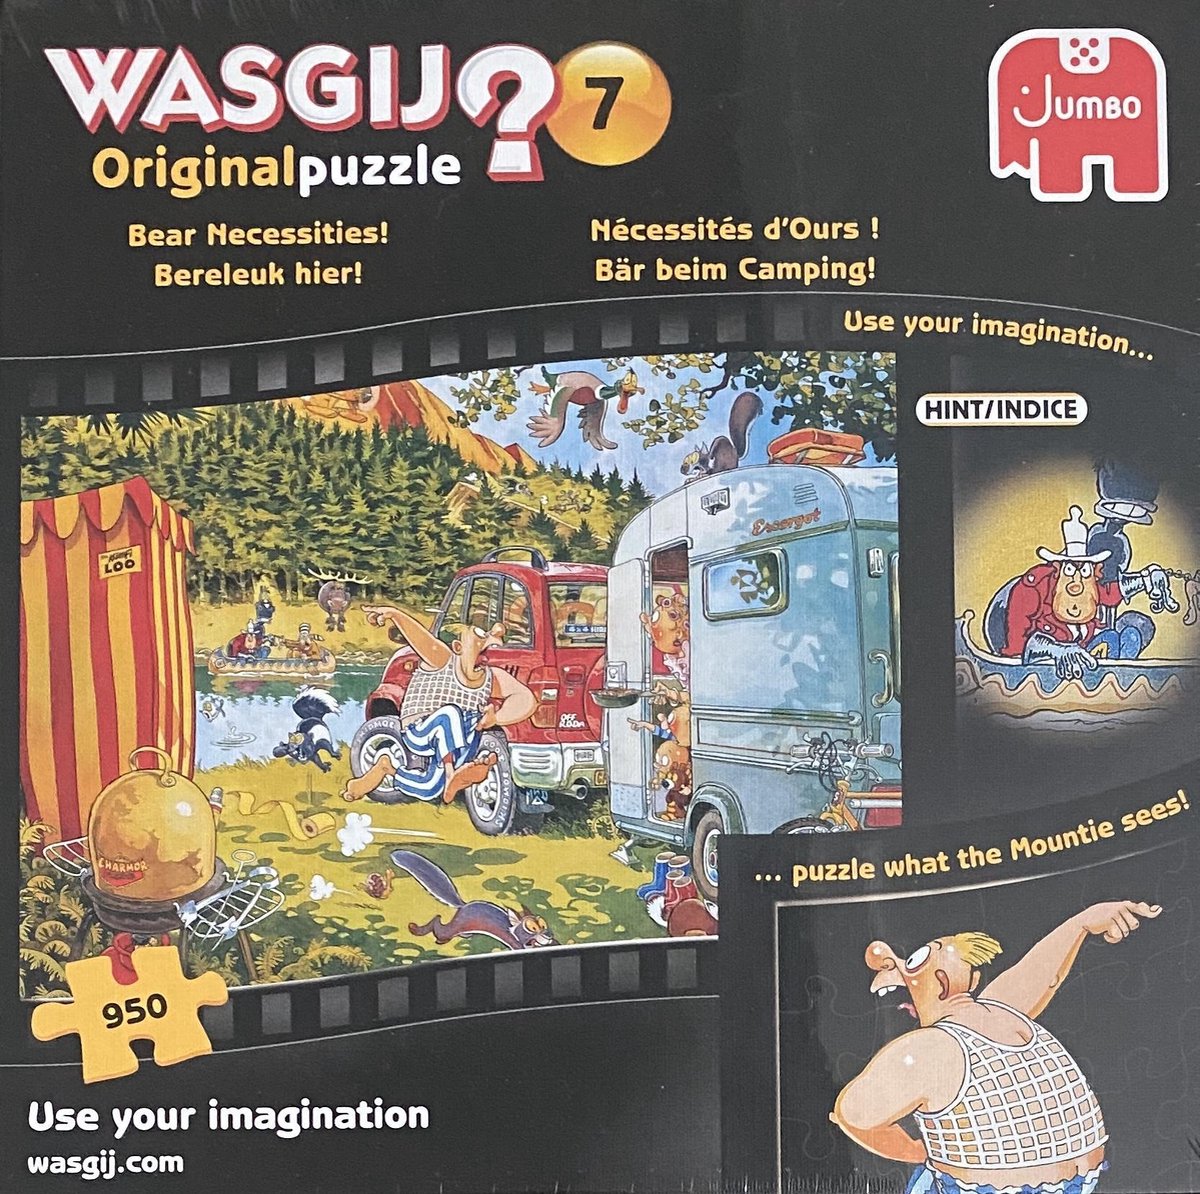 Wasgij Original 7 Bereleuk hier! puzzel - 950 stukjes | bol.com